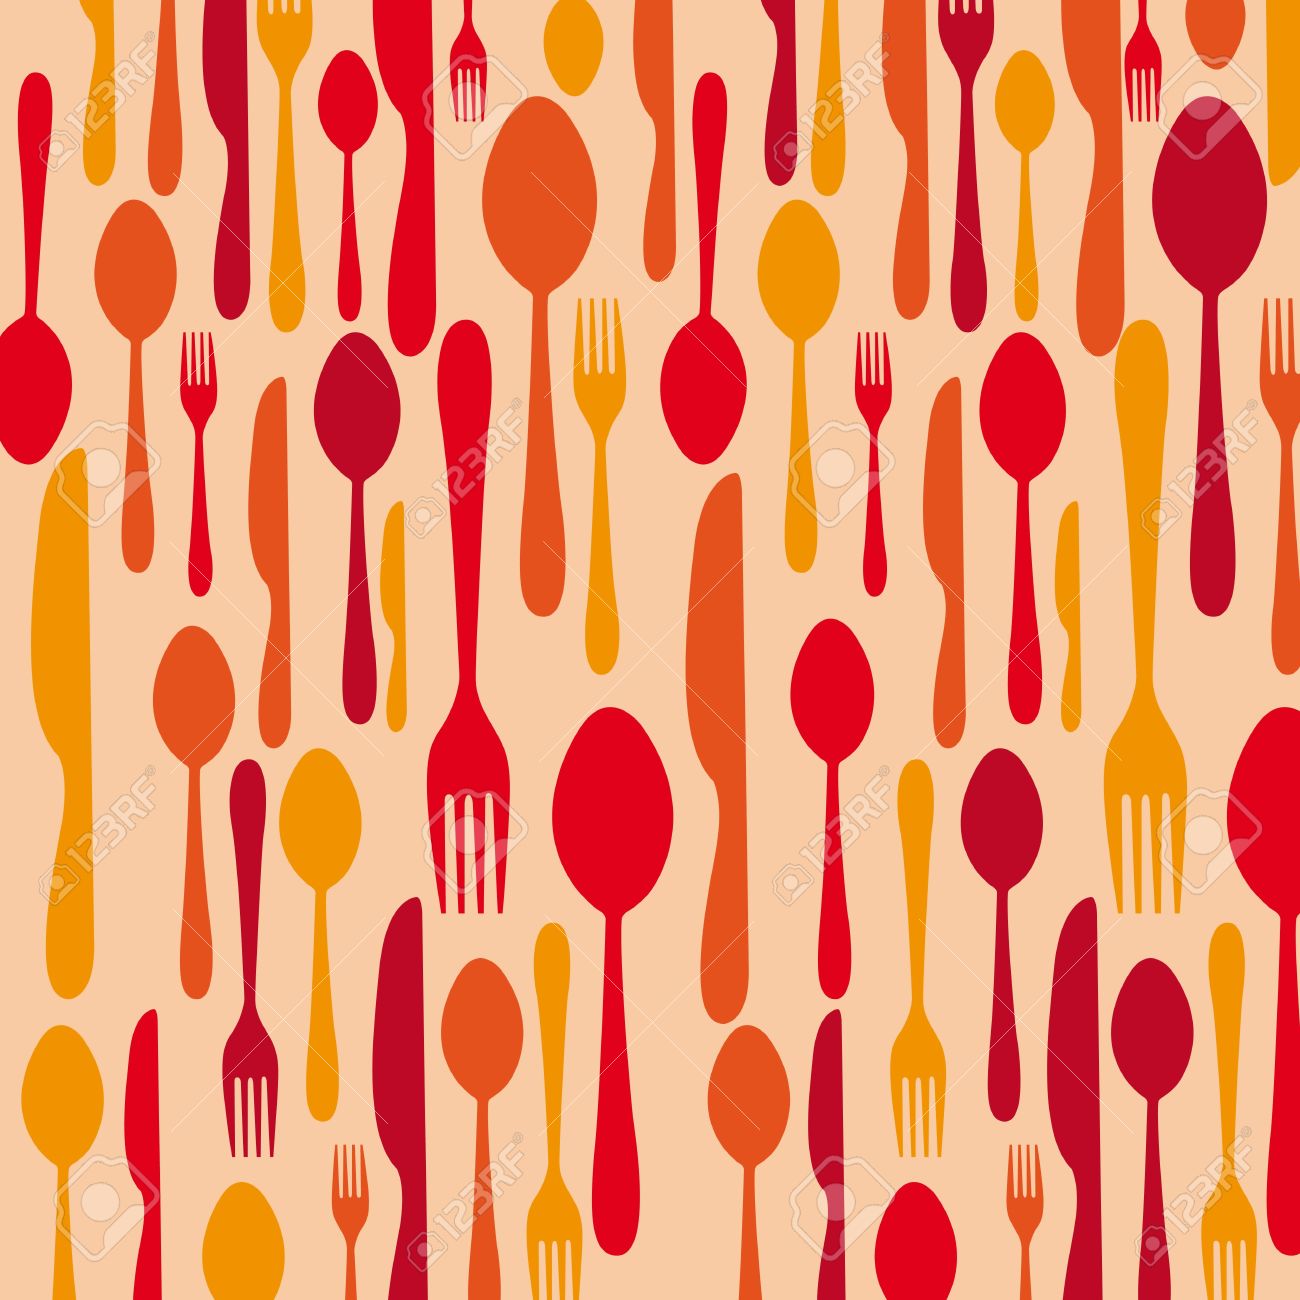 Cutlery Over Orange Background Vector Illustration Royalty